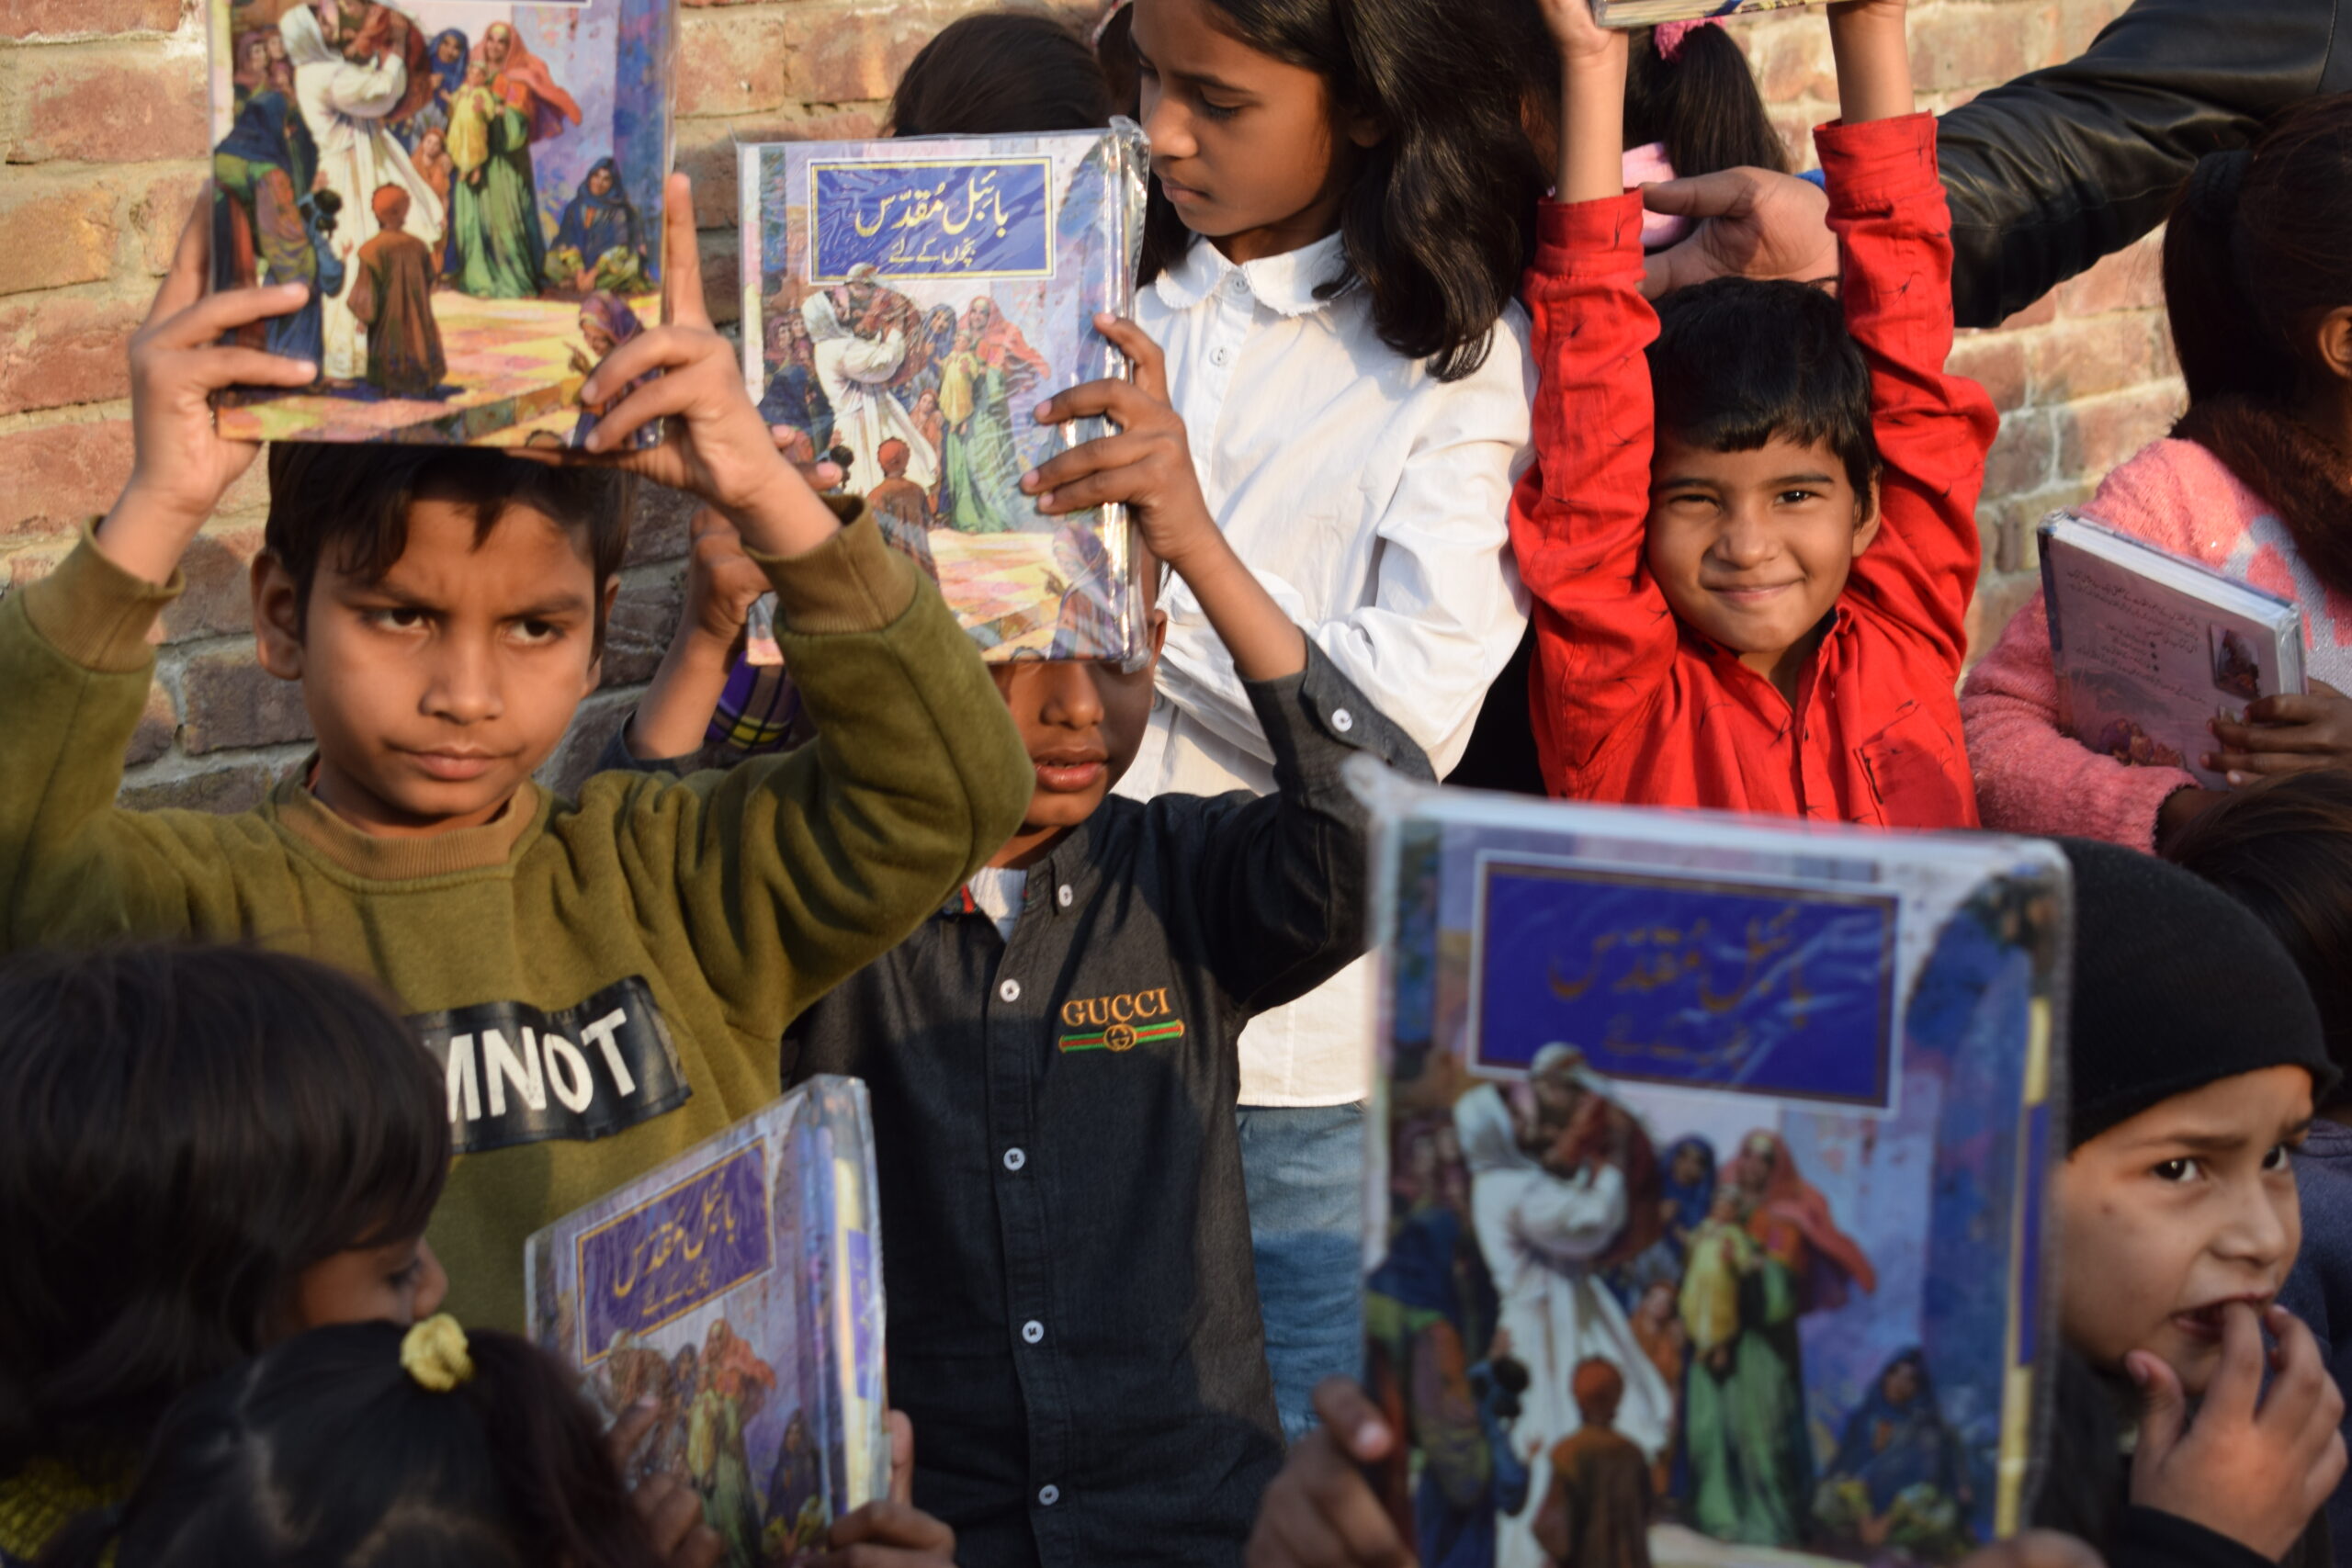 Children Bibles distributed among Children